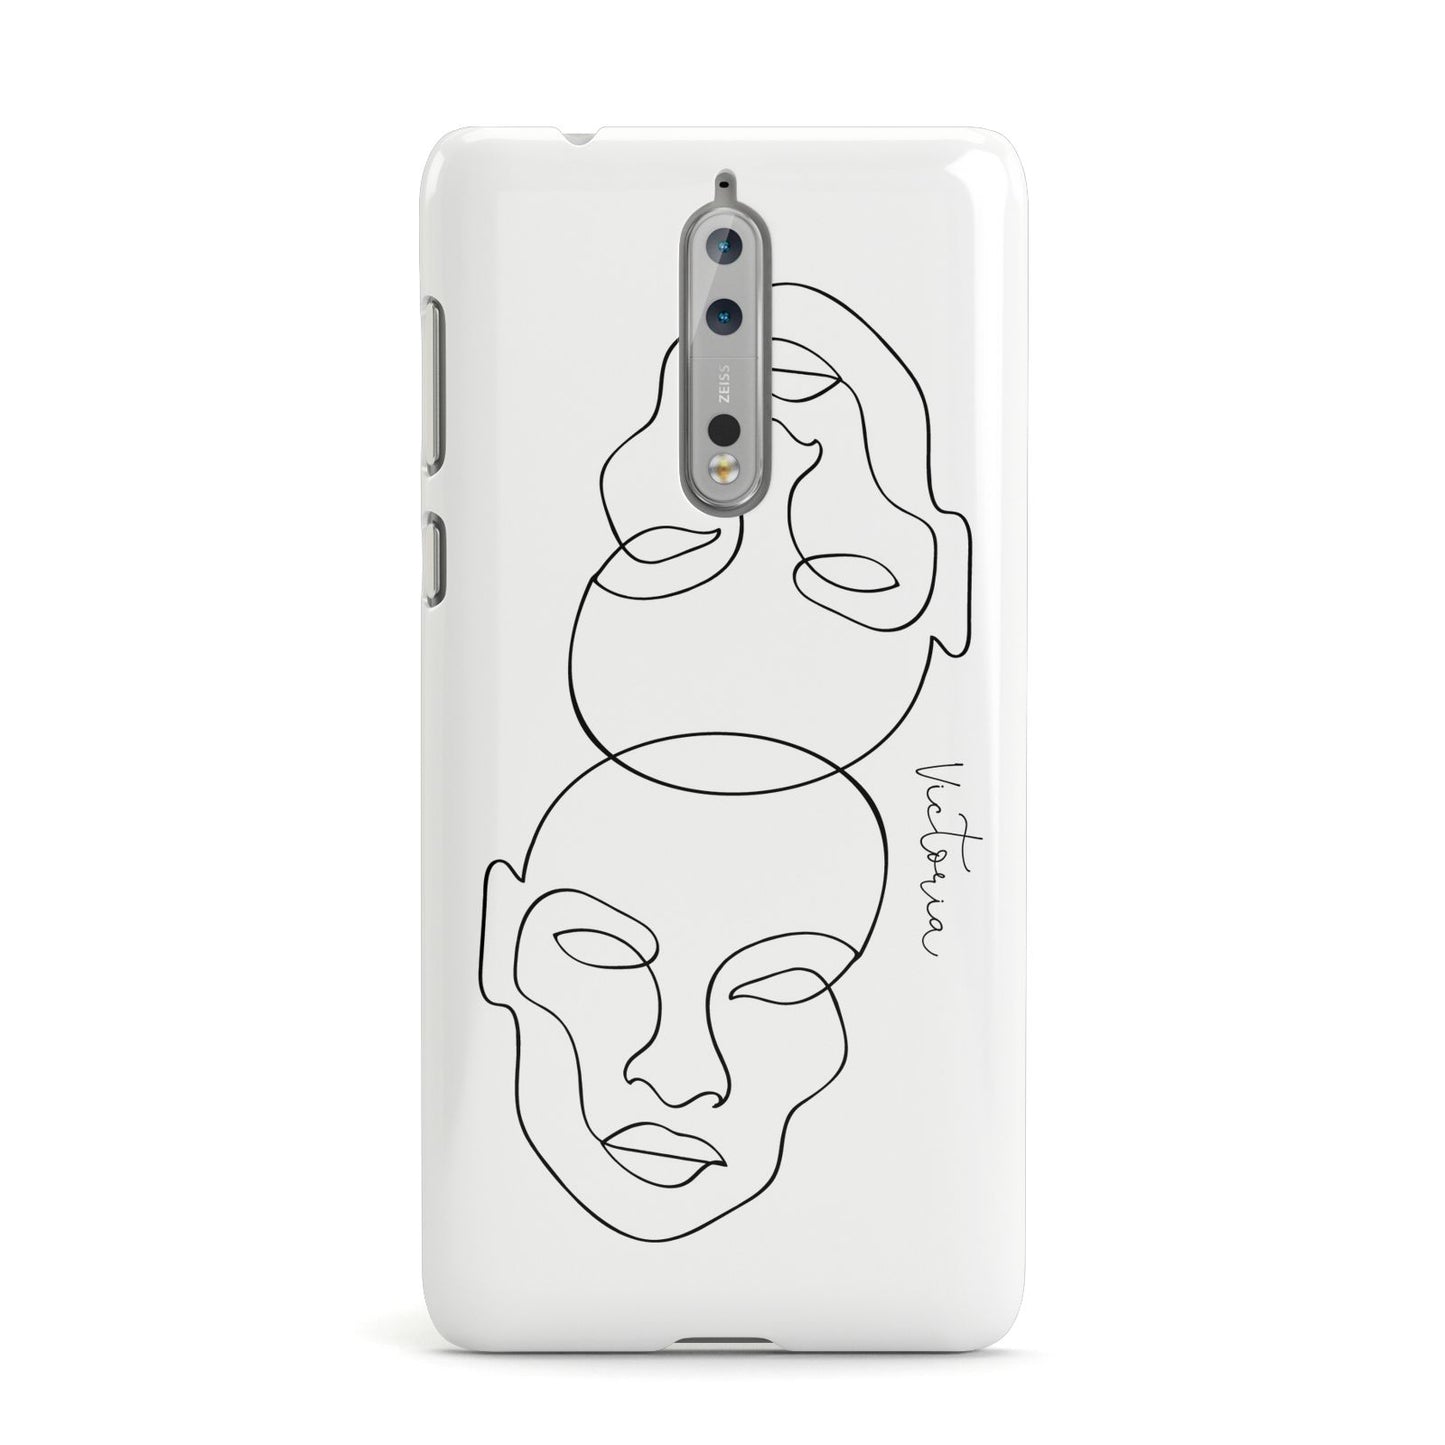 Personalised White Line Art Nokia Case